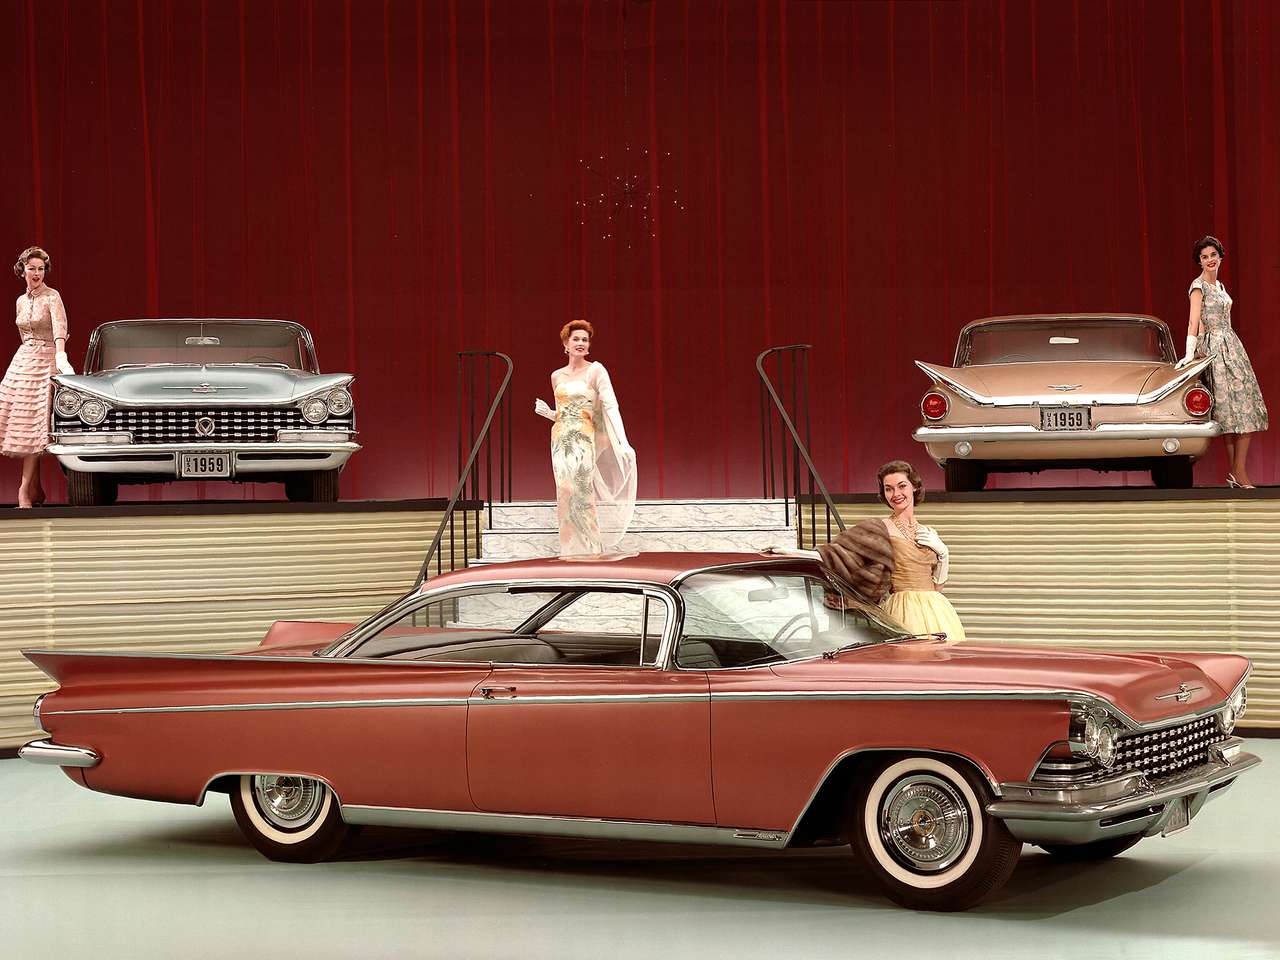 2-дверный хардтоп Buick Invicta 1959 года выпуска онлайн-пазл